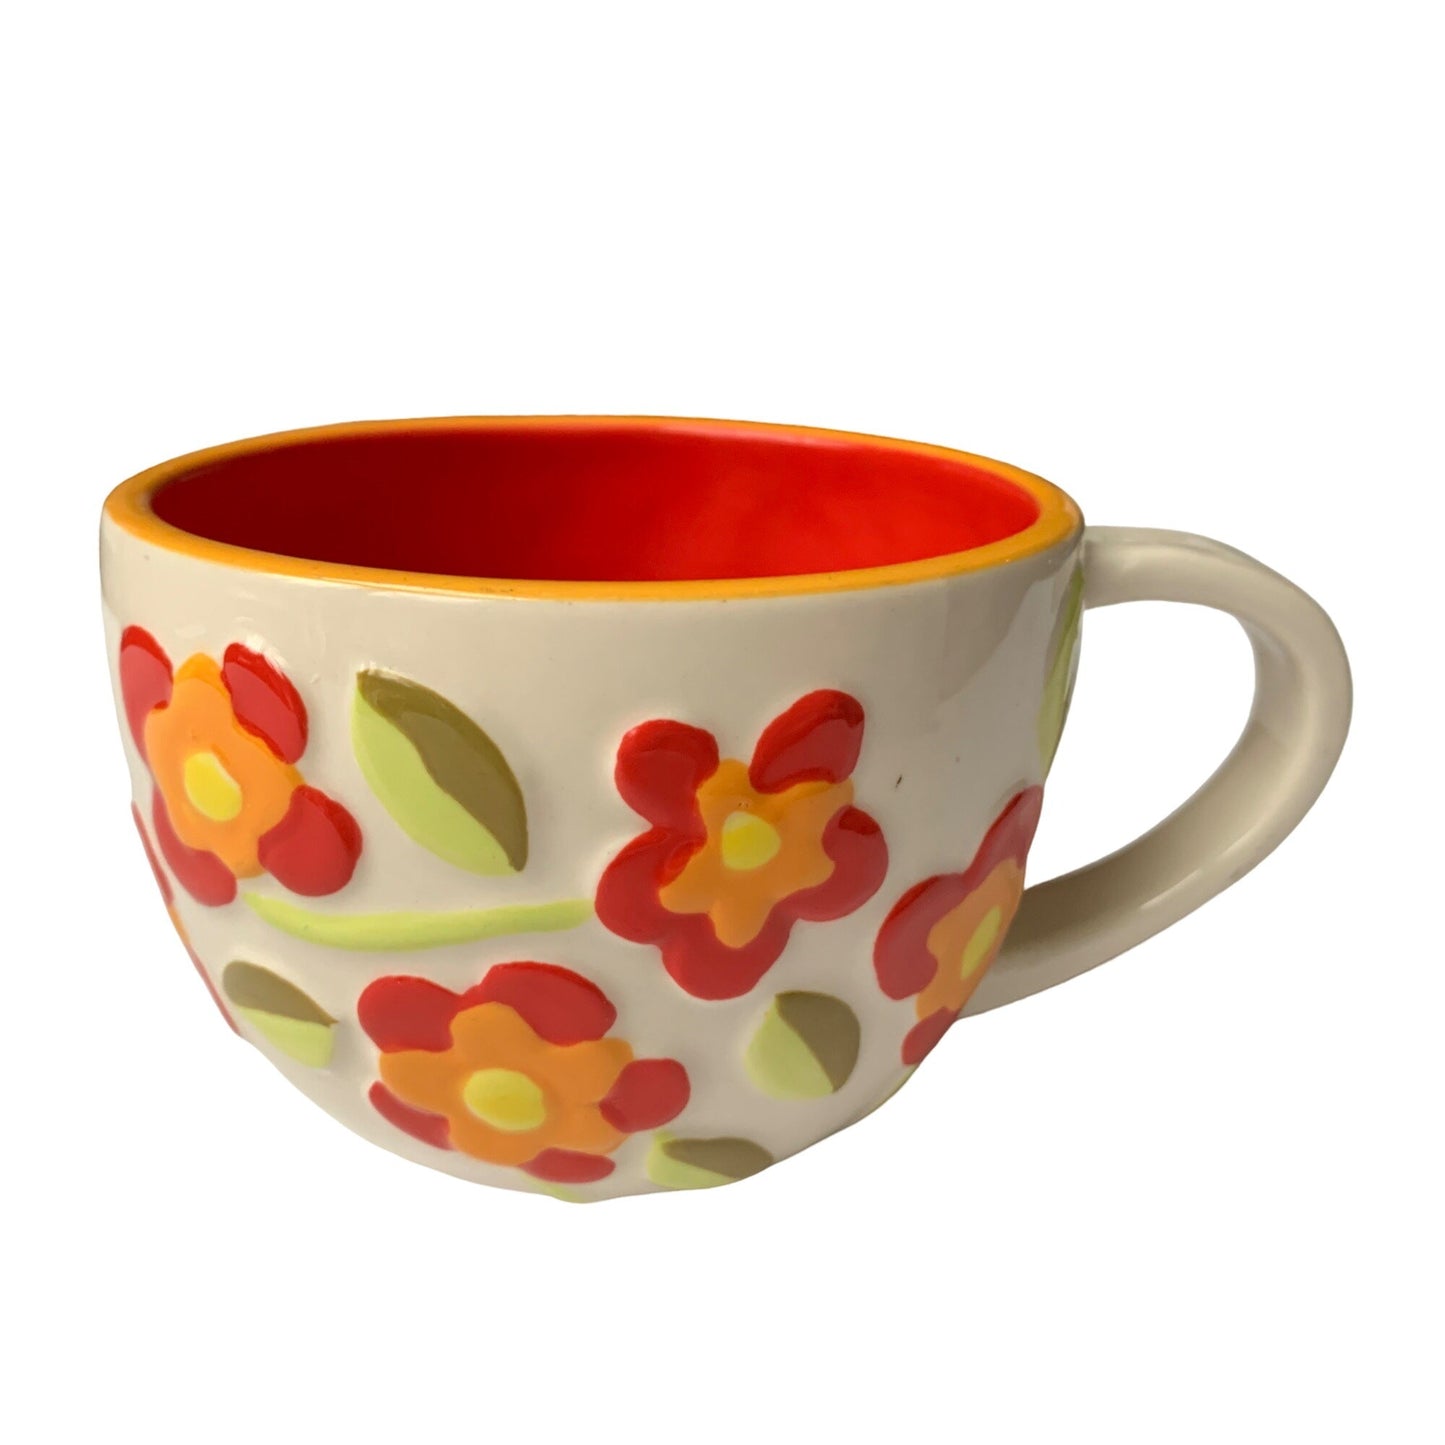 Starbucks 2008 Hand-Painted 14 oz. Red Floral Ceramic Coffee Mug